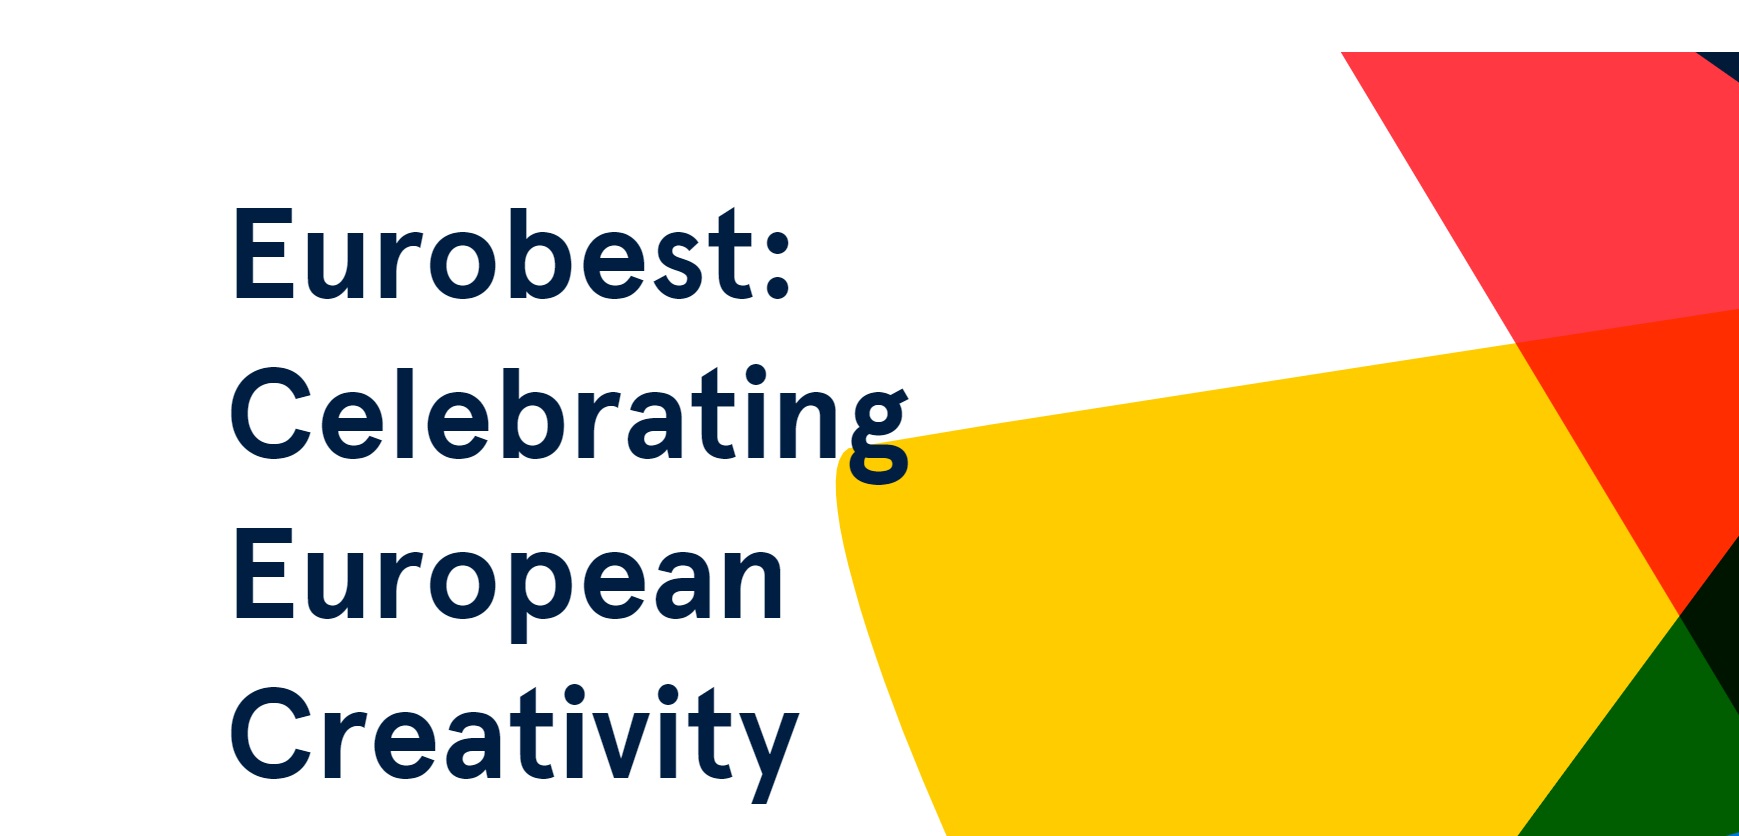 eurobest, creativity, festival, programapueurobest, creativity, festival, programapublicidadblicidad